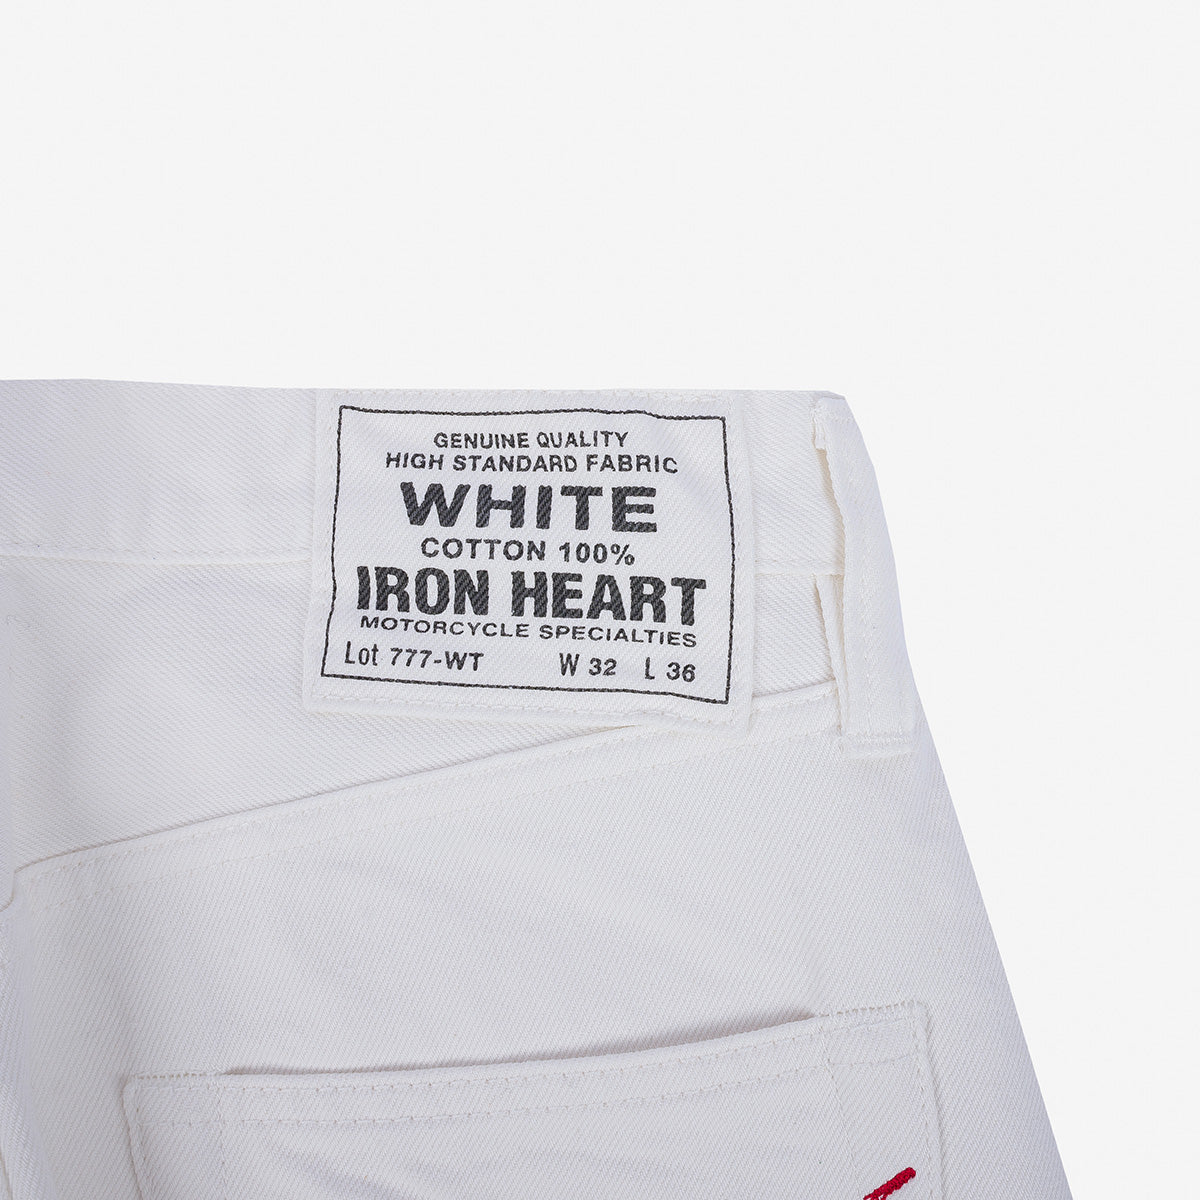 IH-777-WT - 13.5oz Cotton Twill Slim Tapered Cut Jeans - White